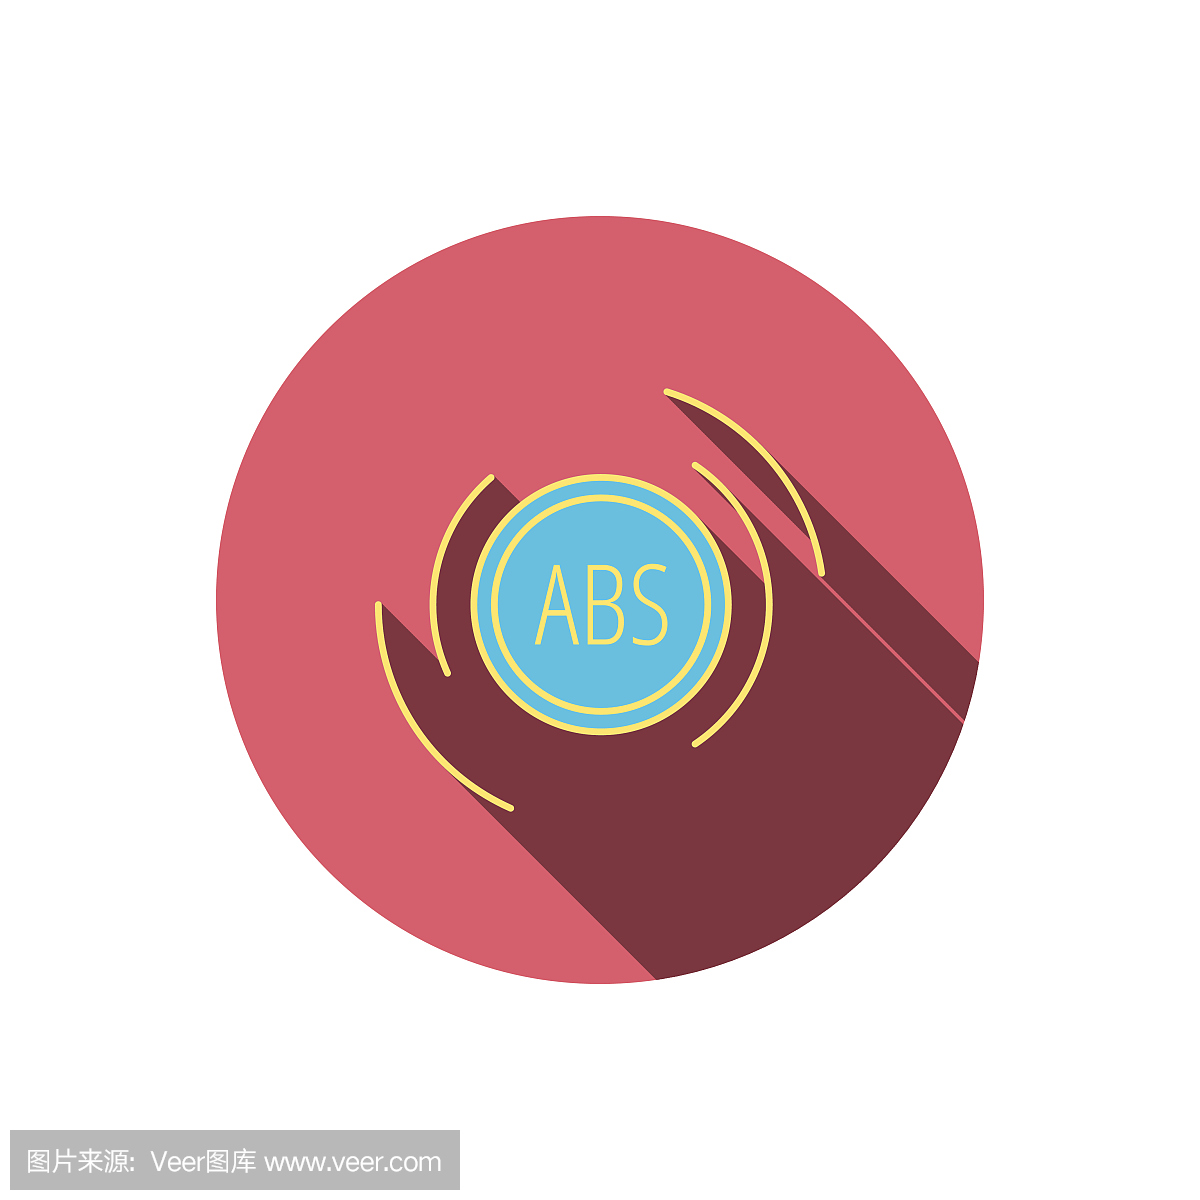 ABS图标。制动器防抱死系统标志。